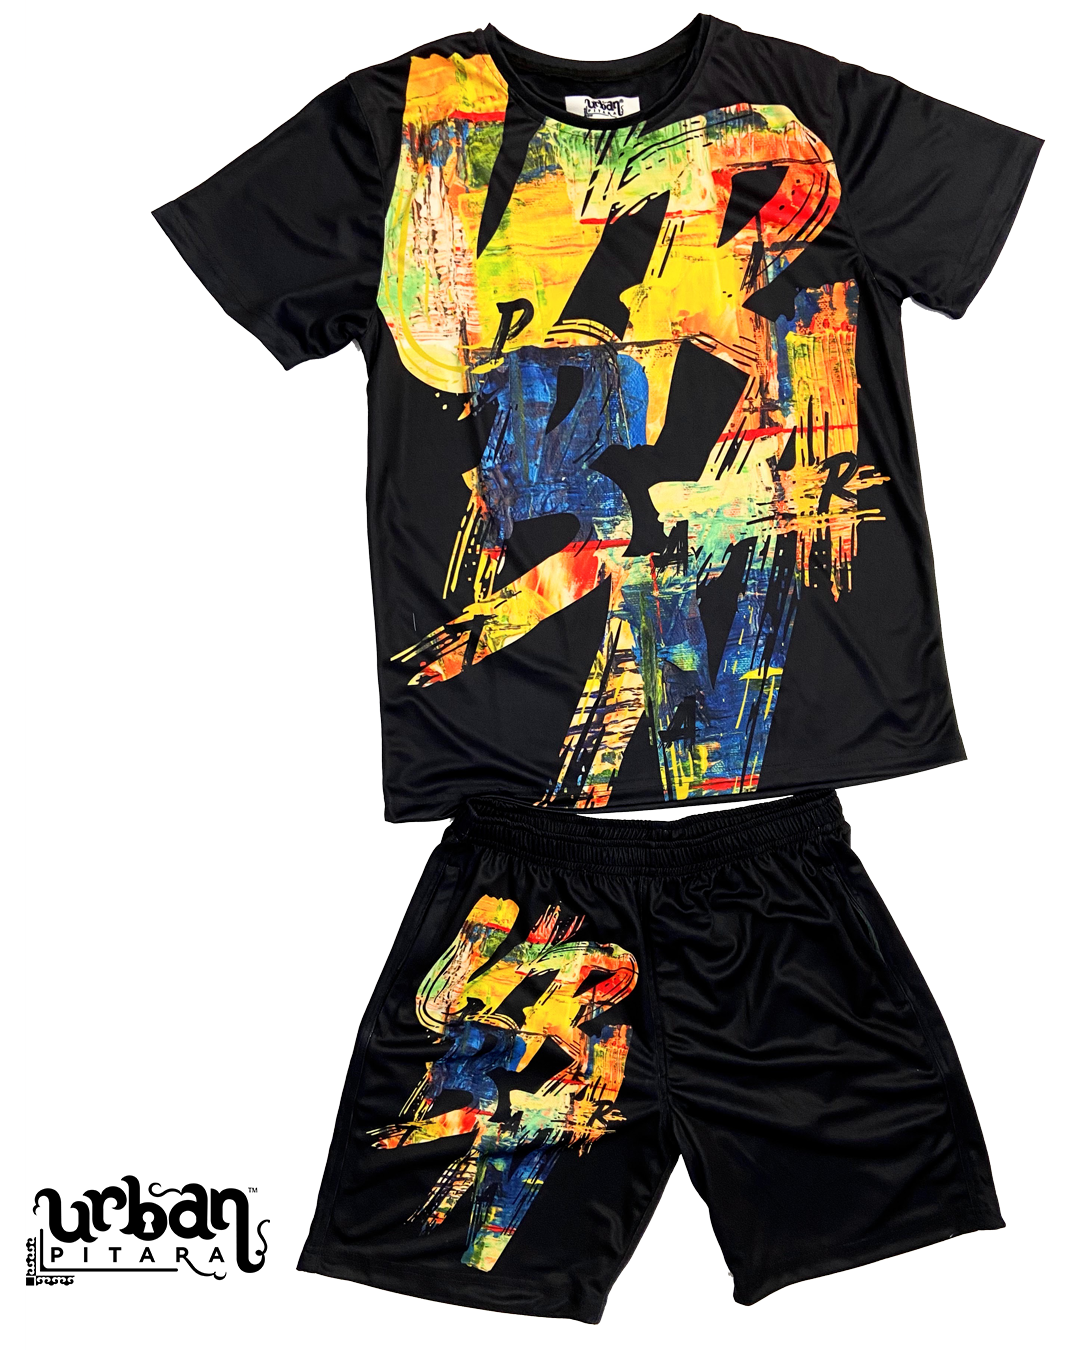 Urban Typo T-shirt and Shorts Combo